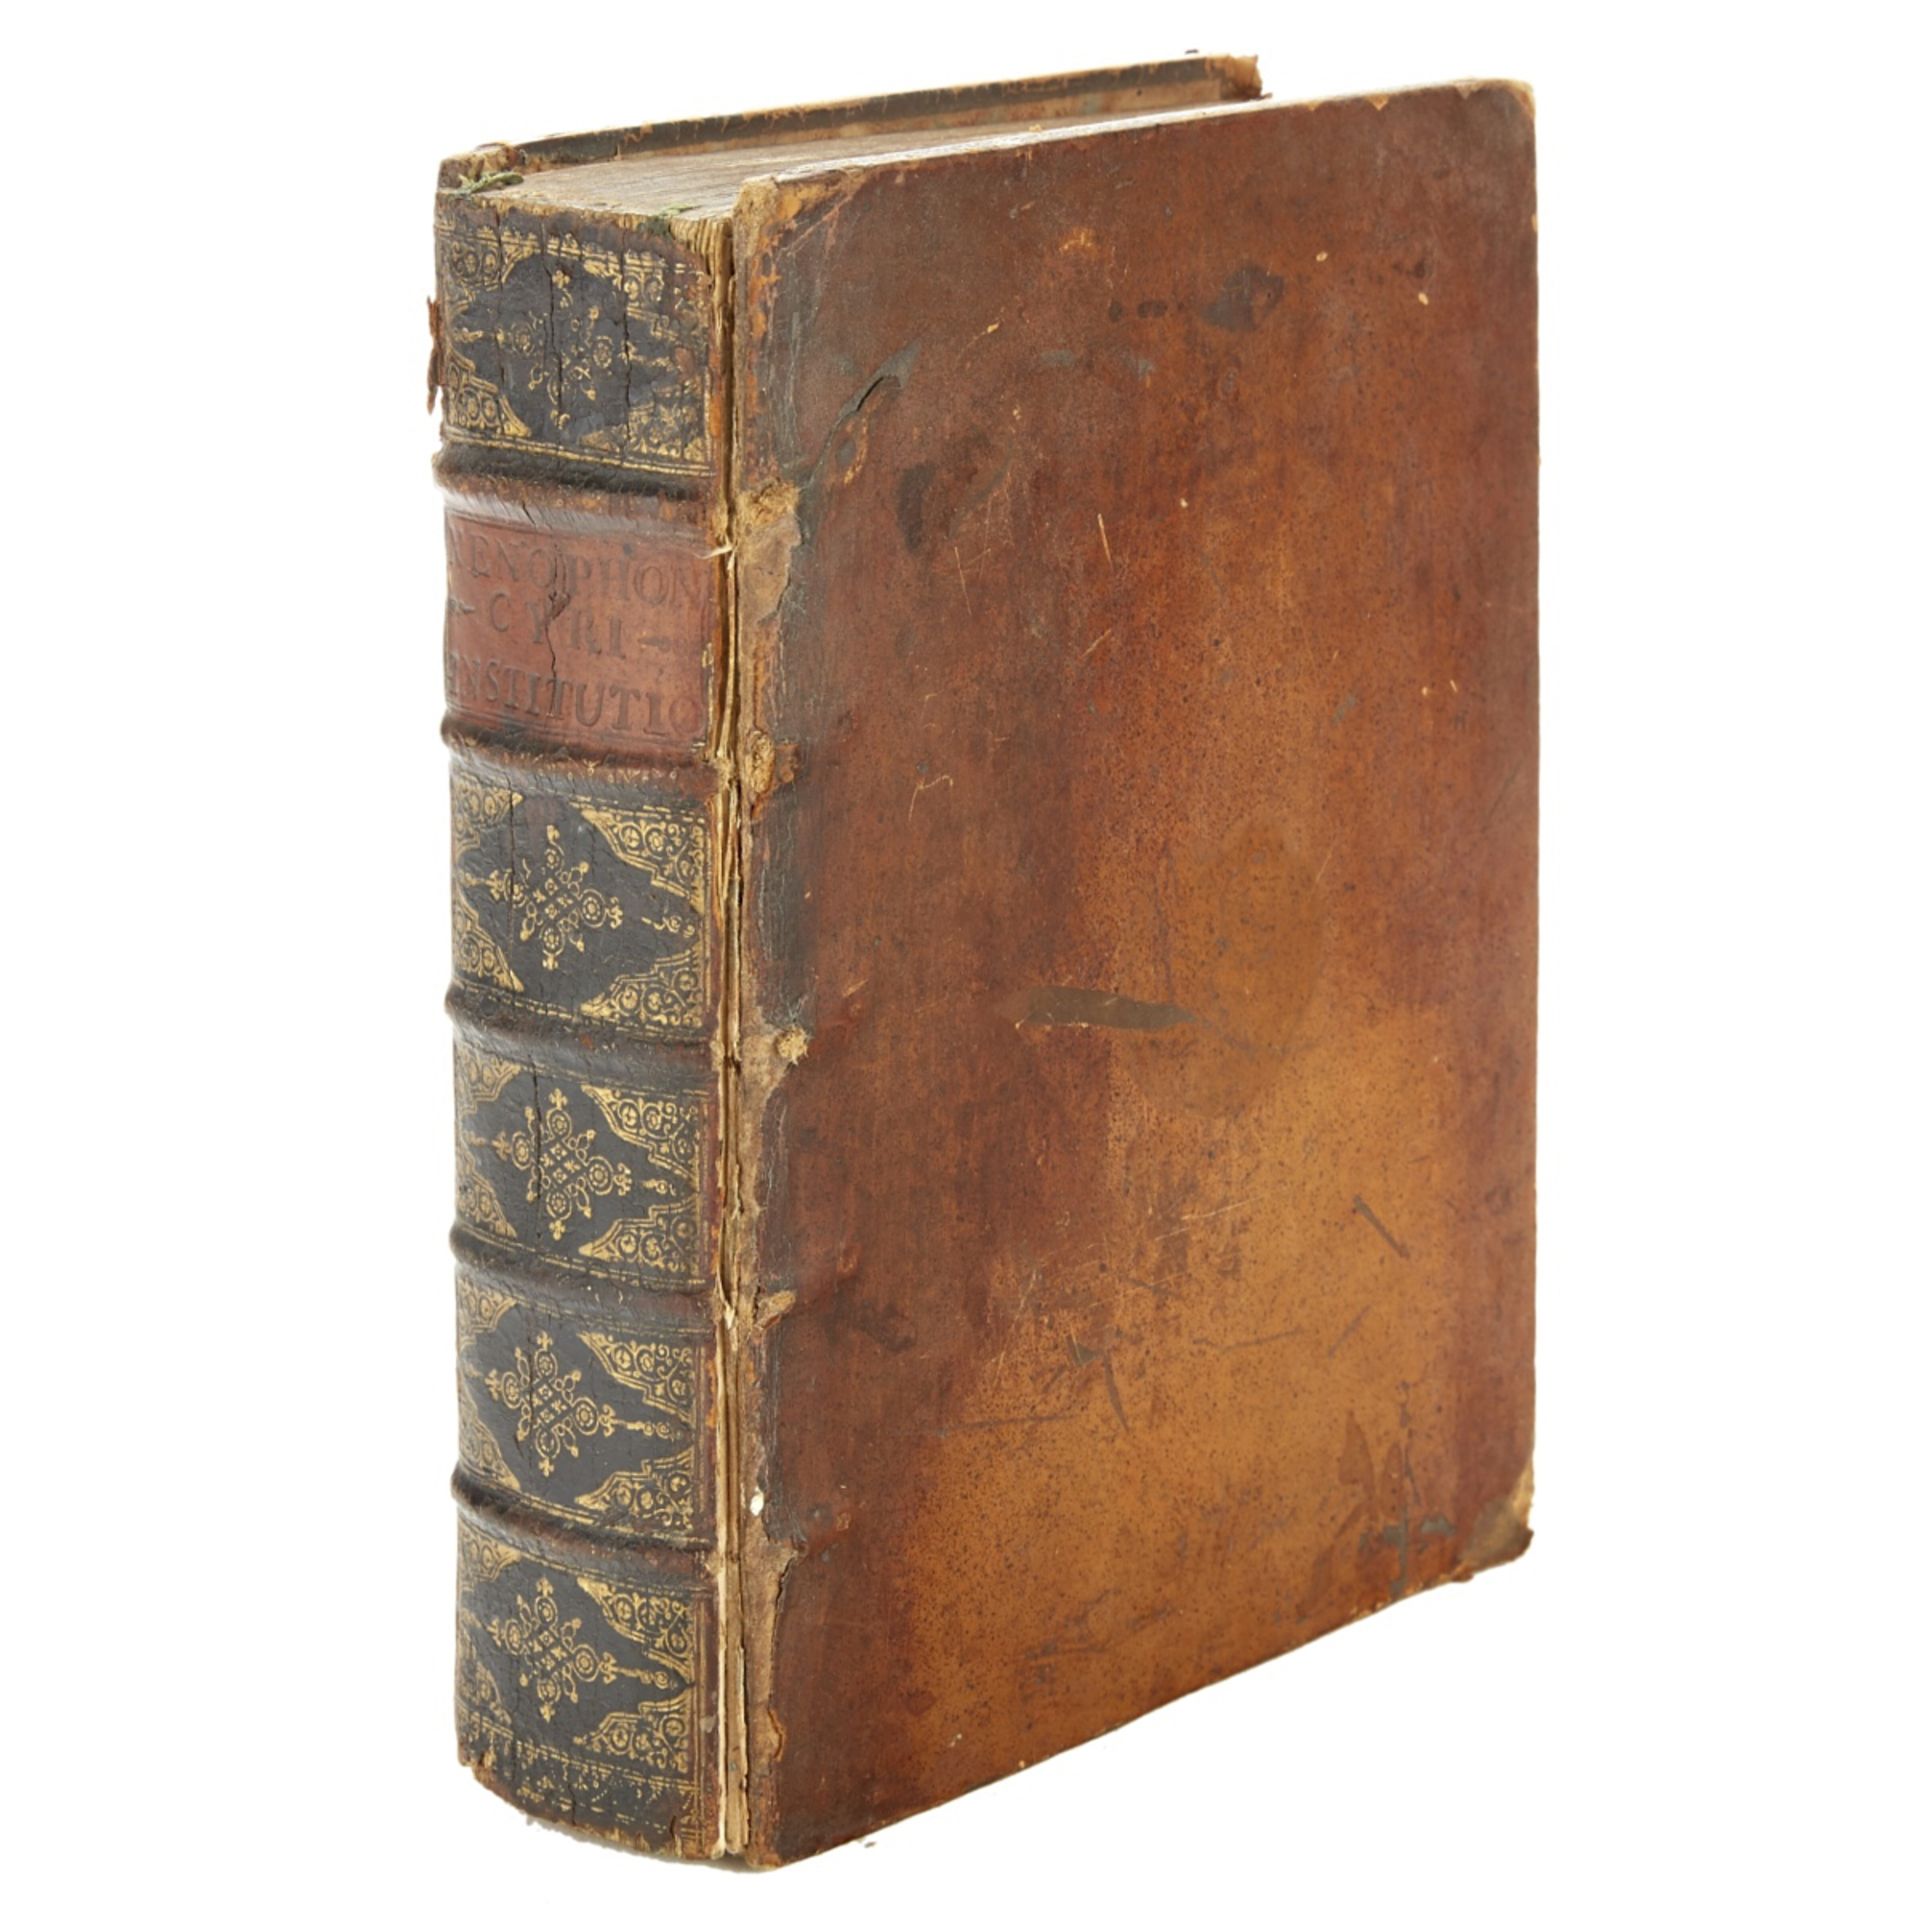 Thomas Hutchinson ed. "Xenophontis de Cyri Institutione" Book 8 1727